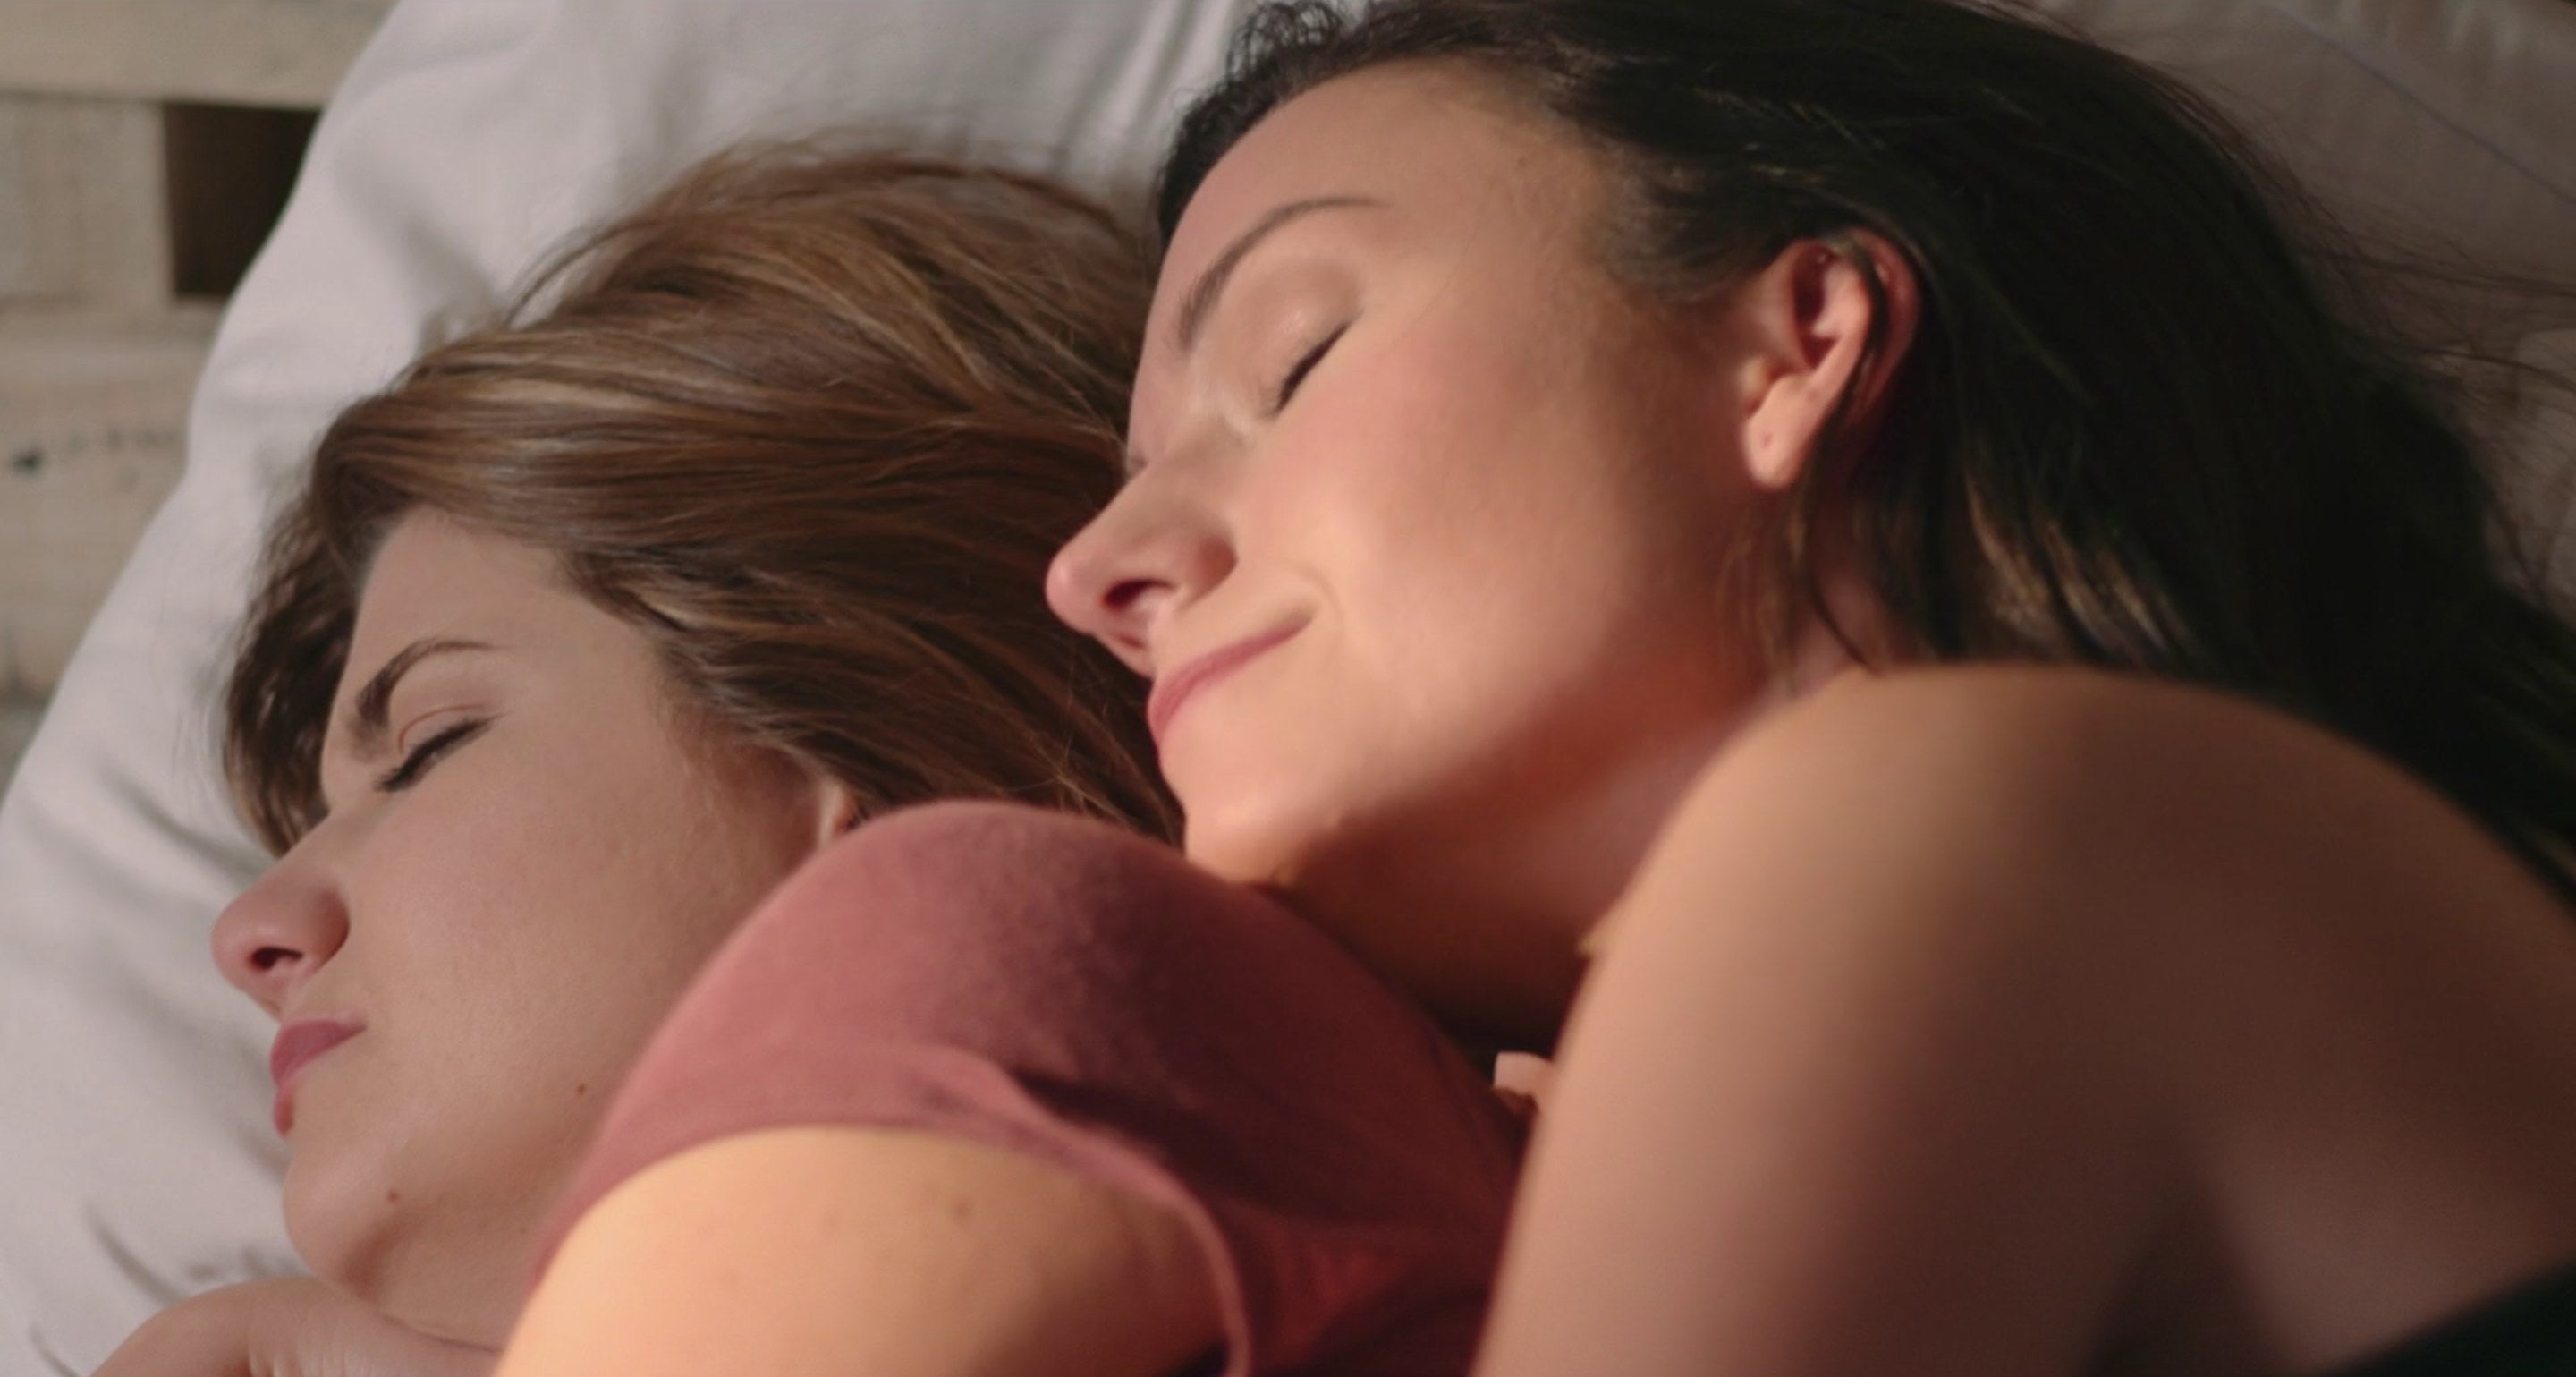 Two women snuggling